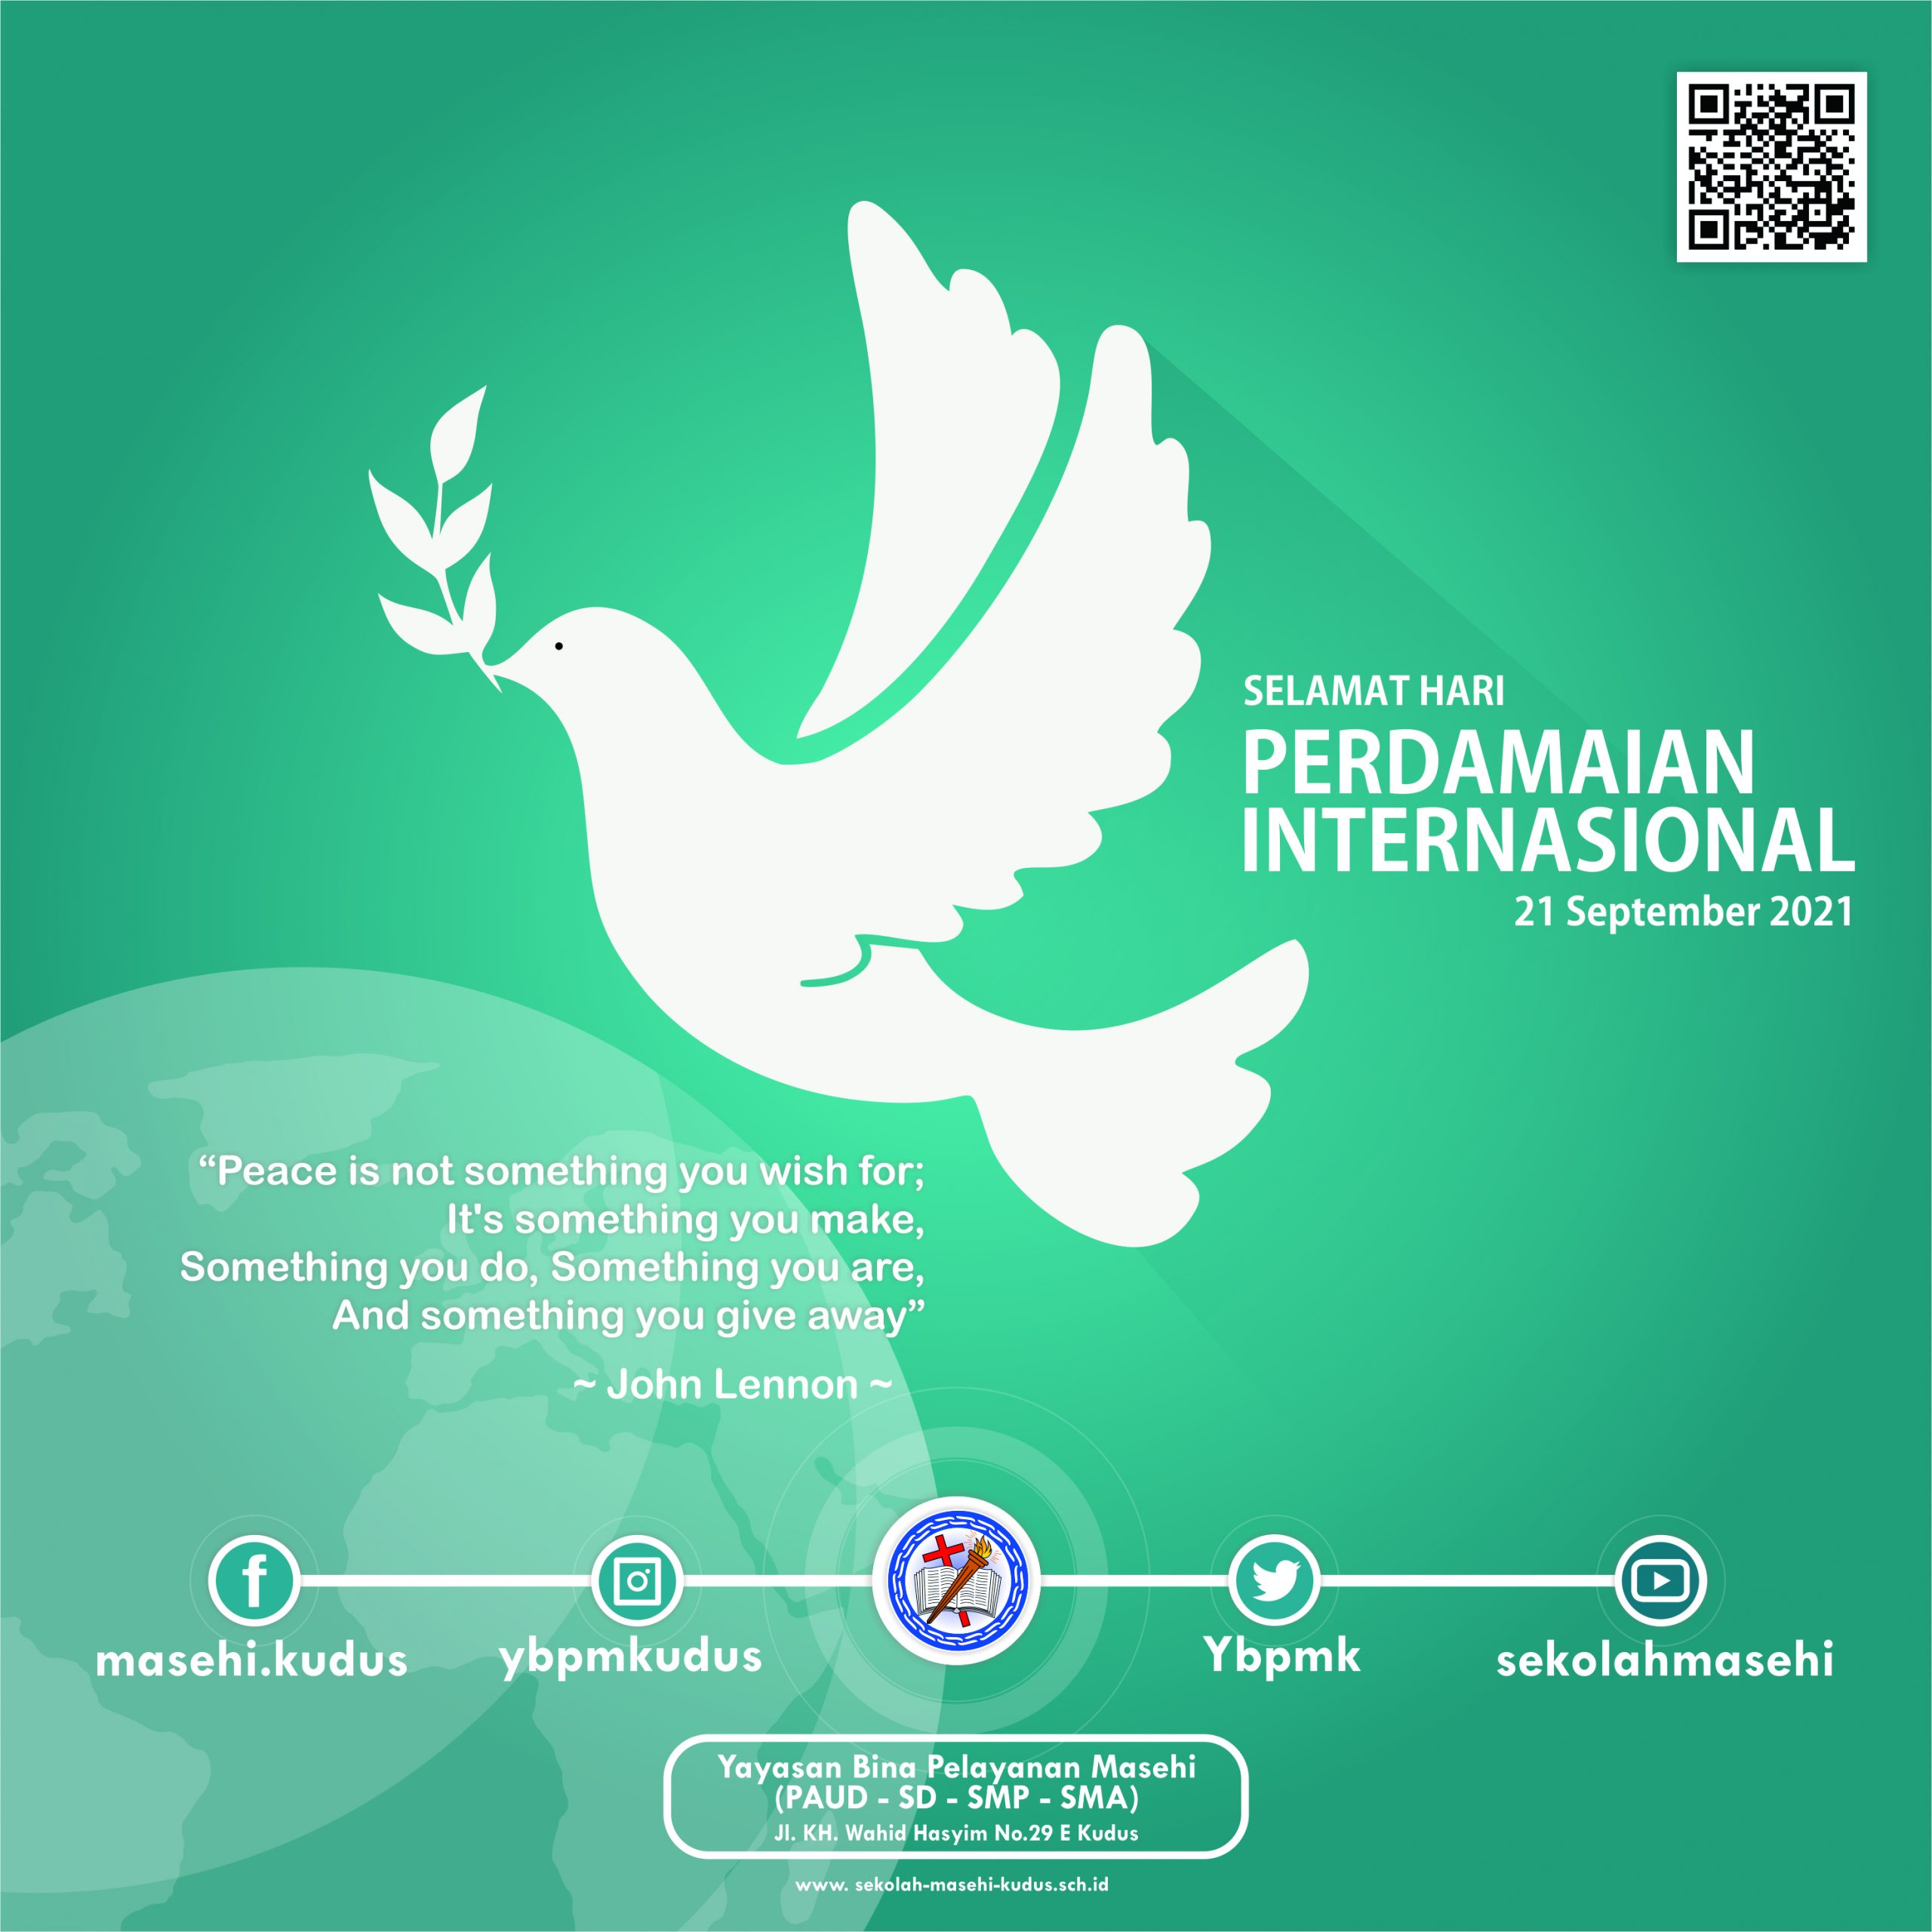 Selamat Hari Perdamaian Internasional